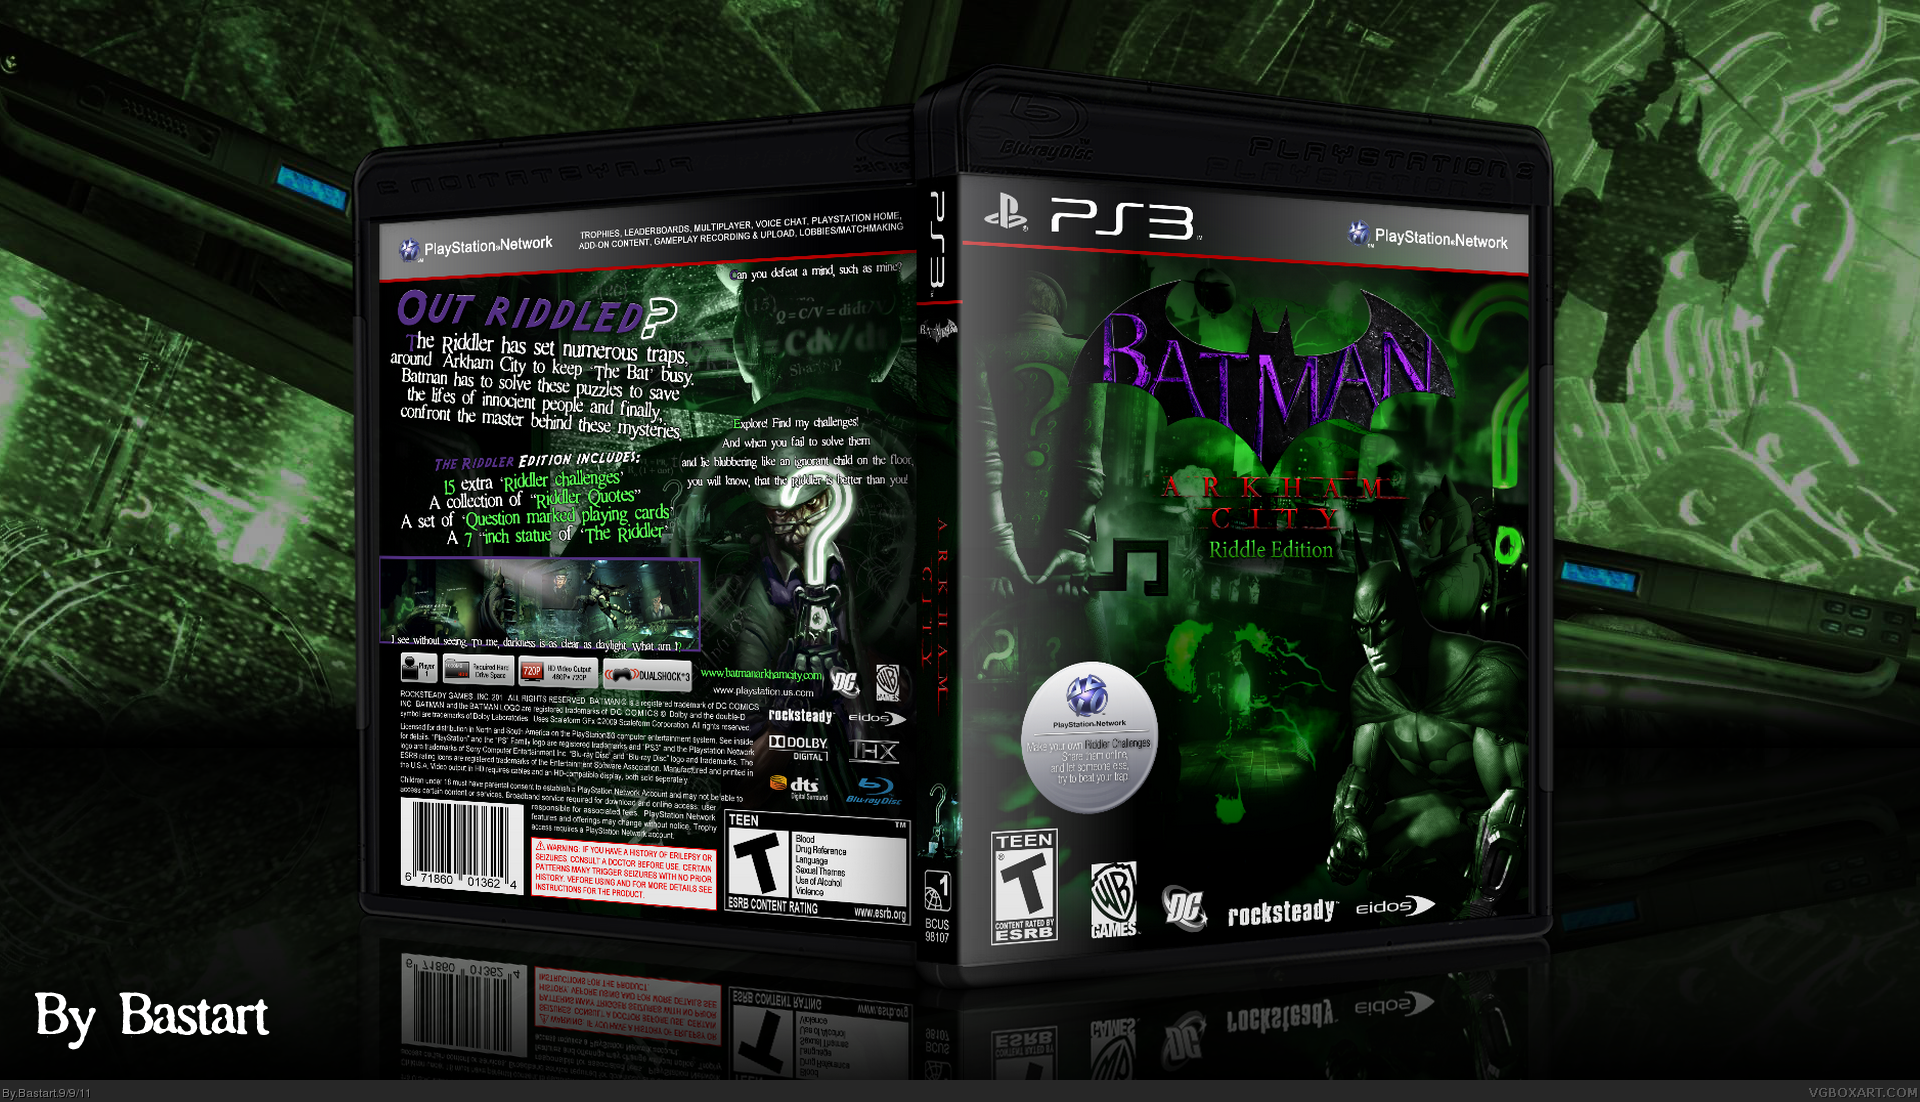 Batman Arkham City: Riddler Edition box cover